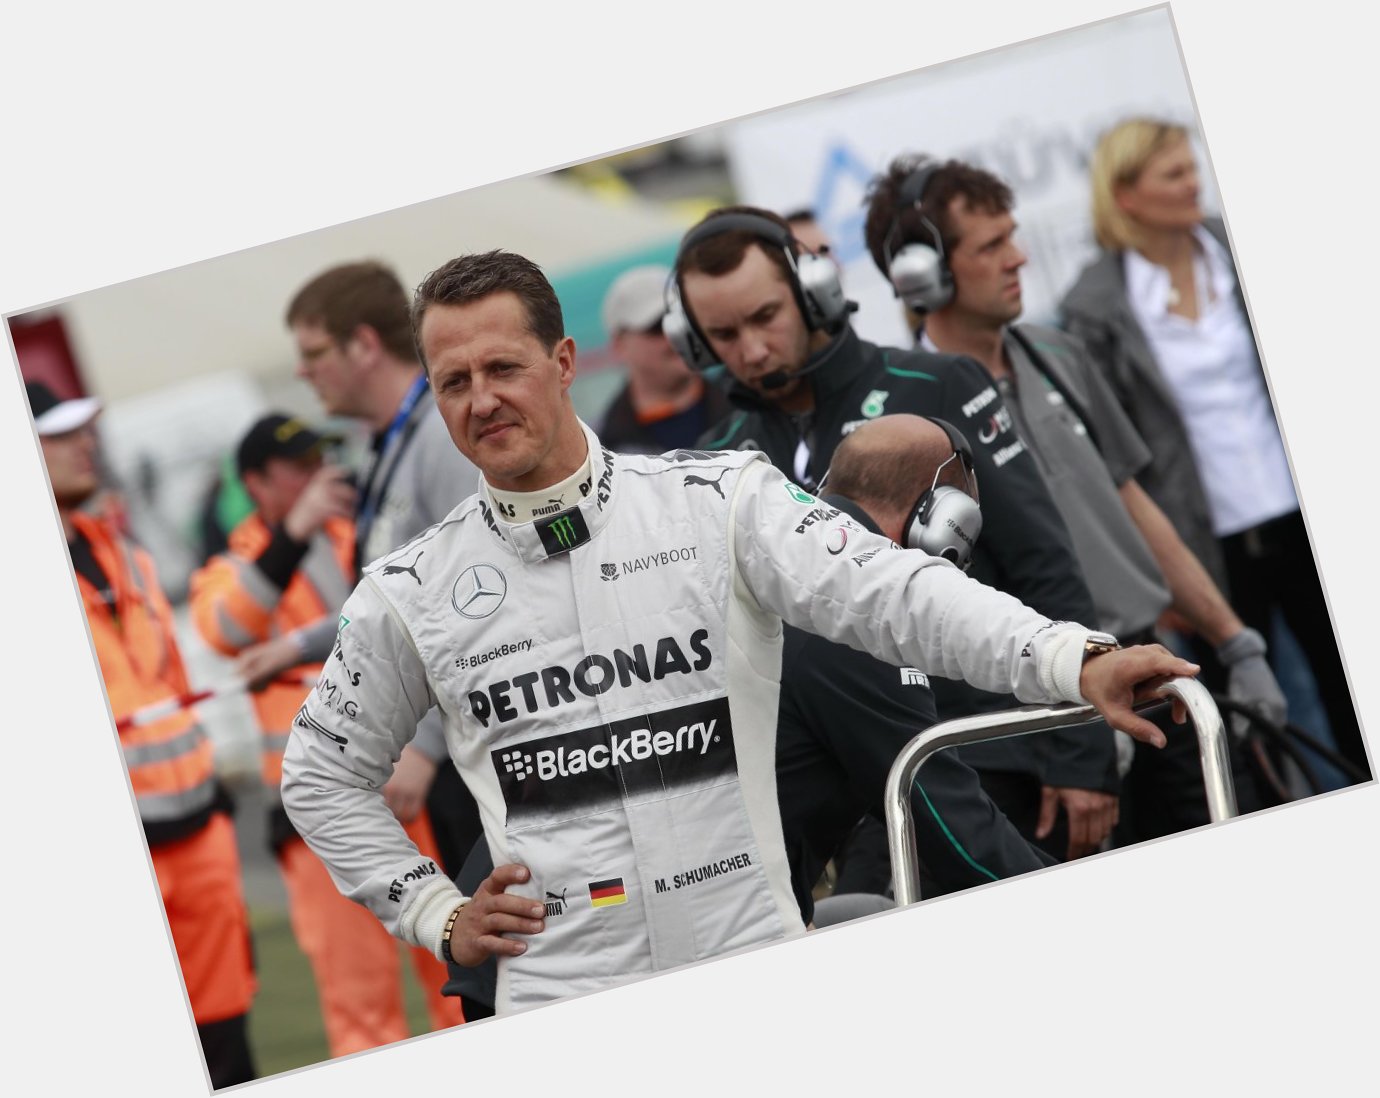 Happy birthday to Michael Schumacher who turns 49 today 